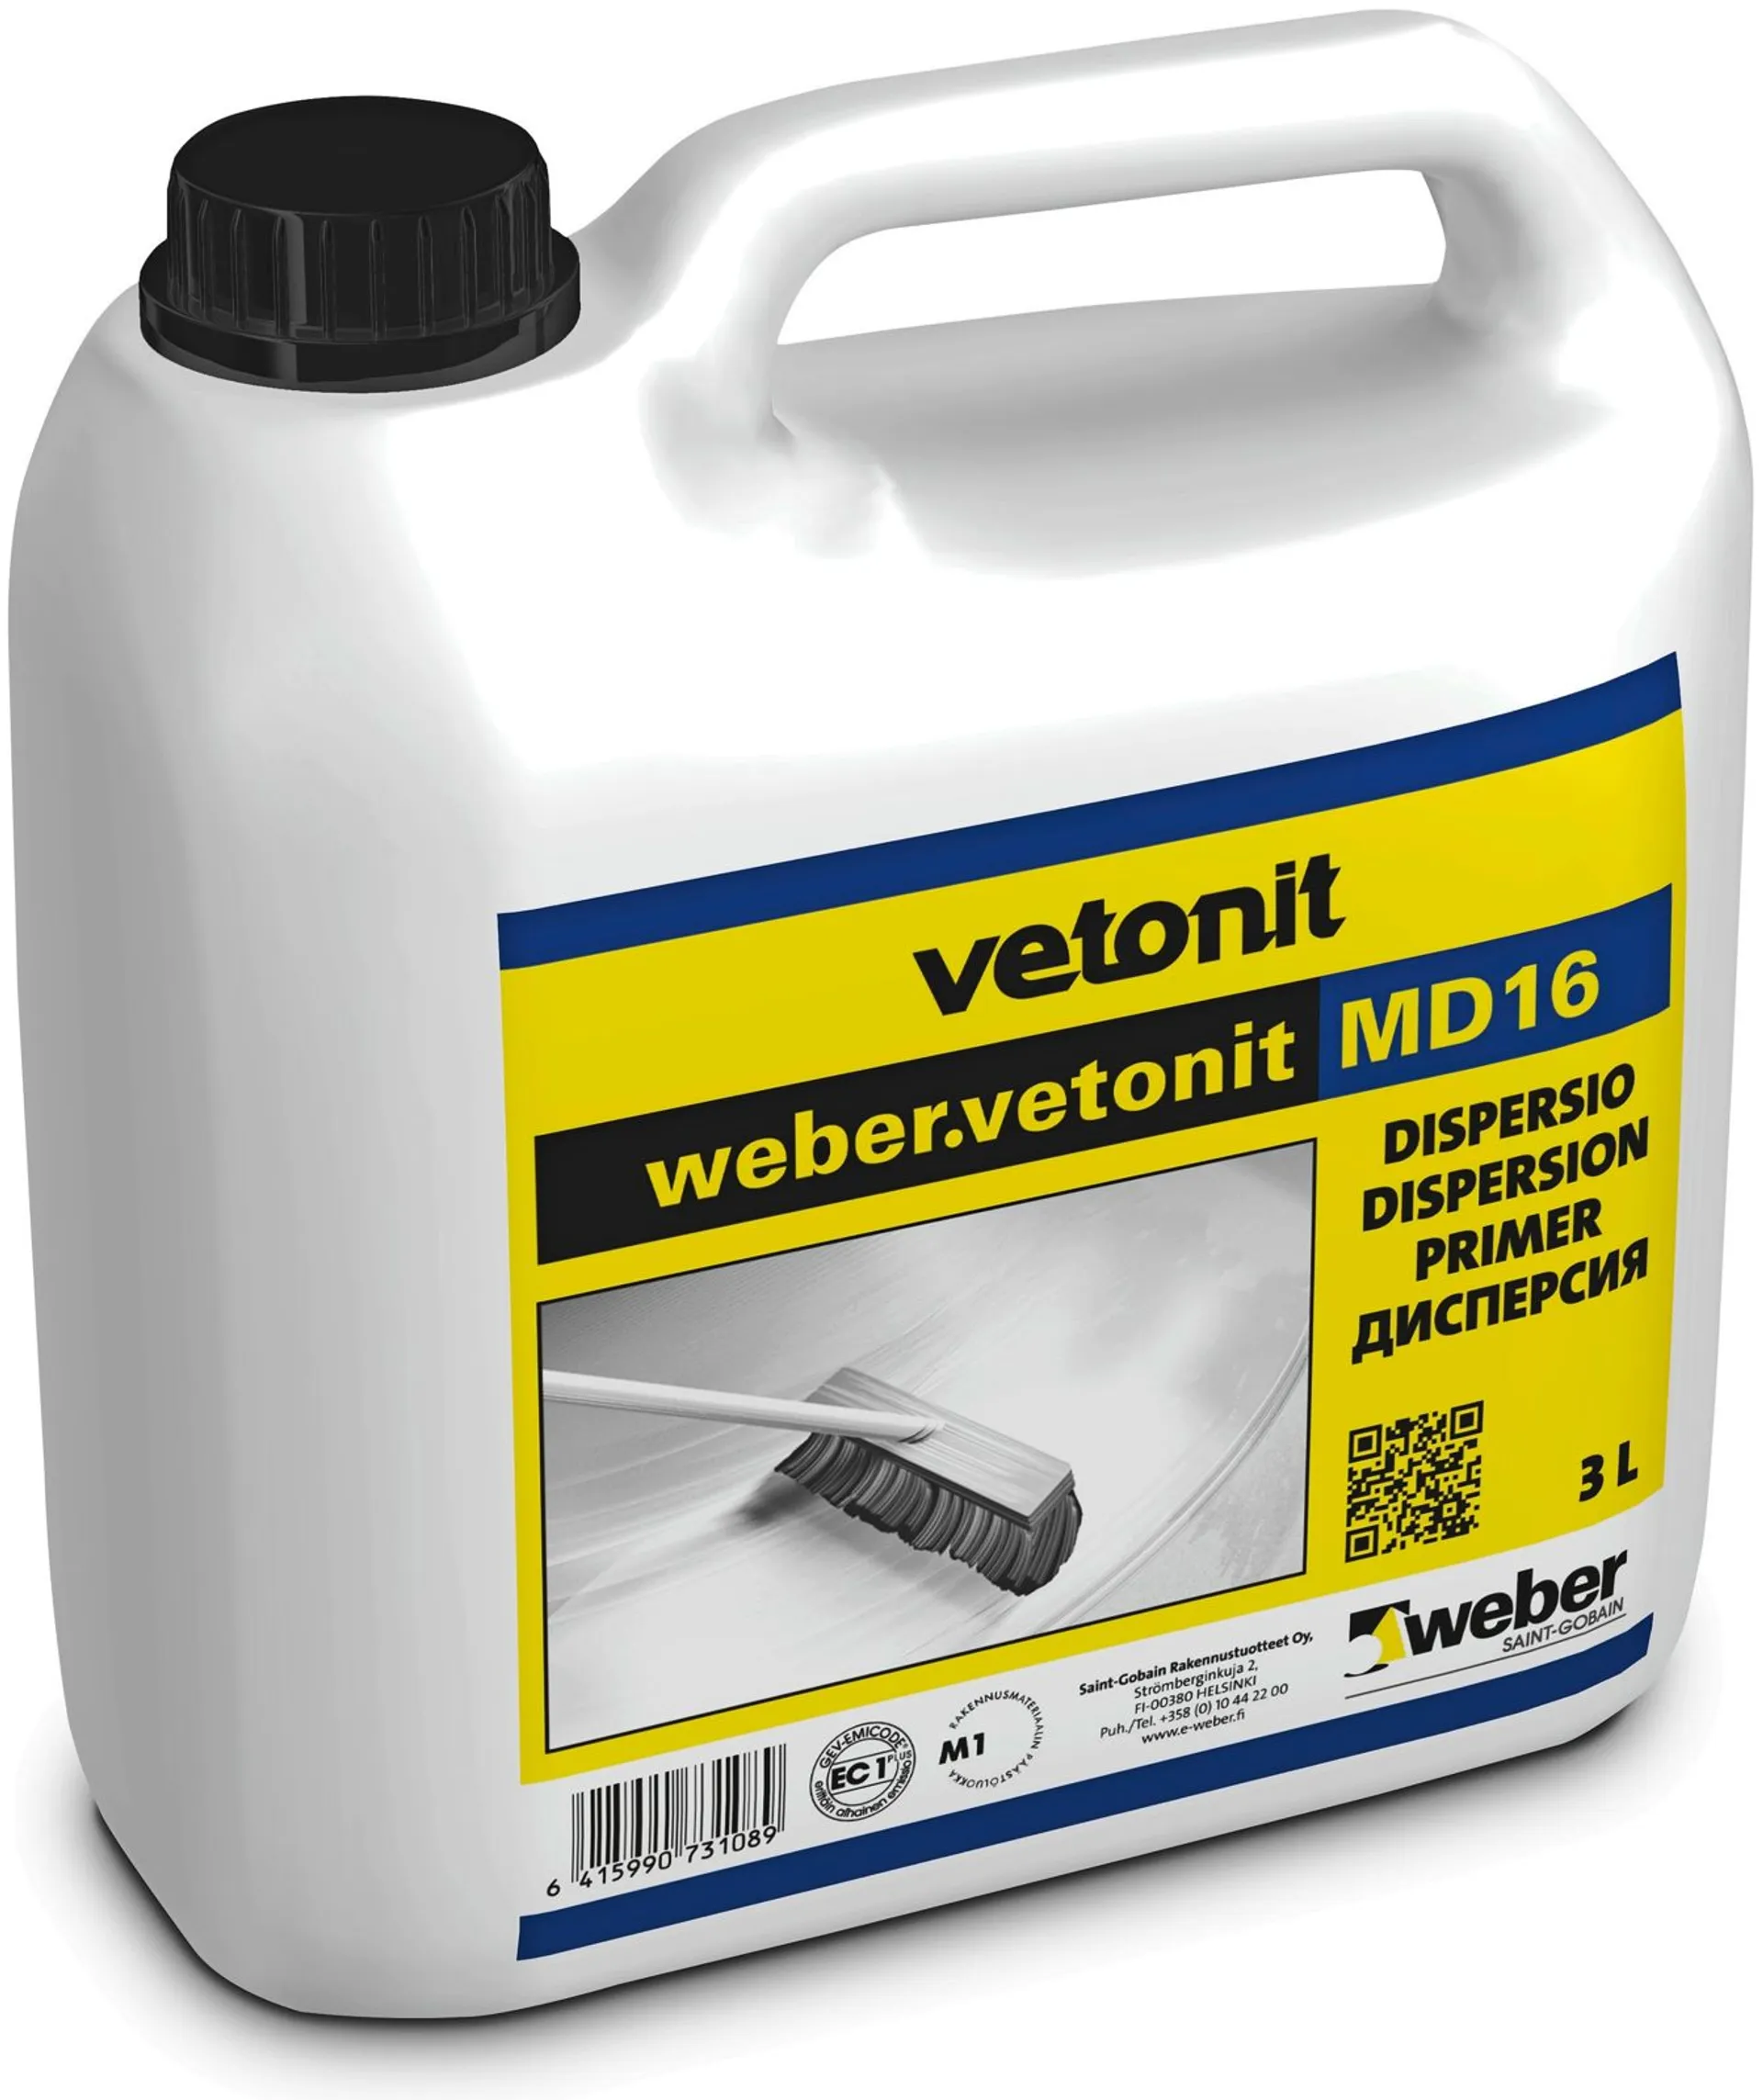 Weber Vetonit MD16 dispersio 3l